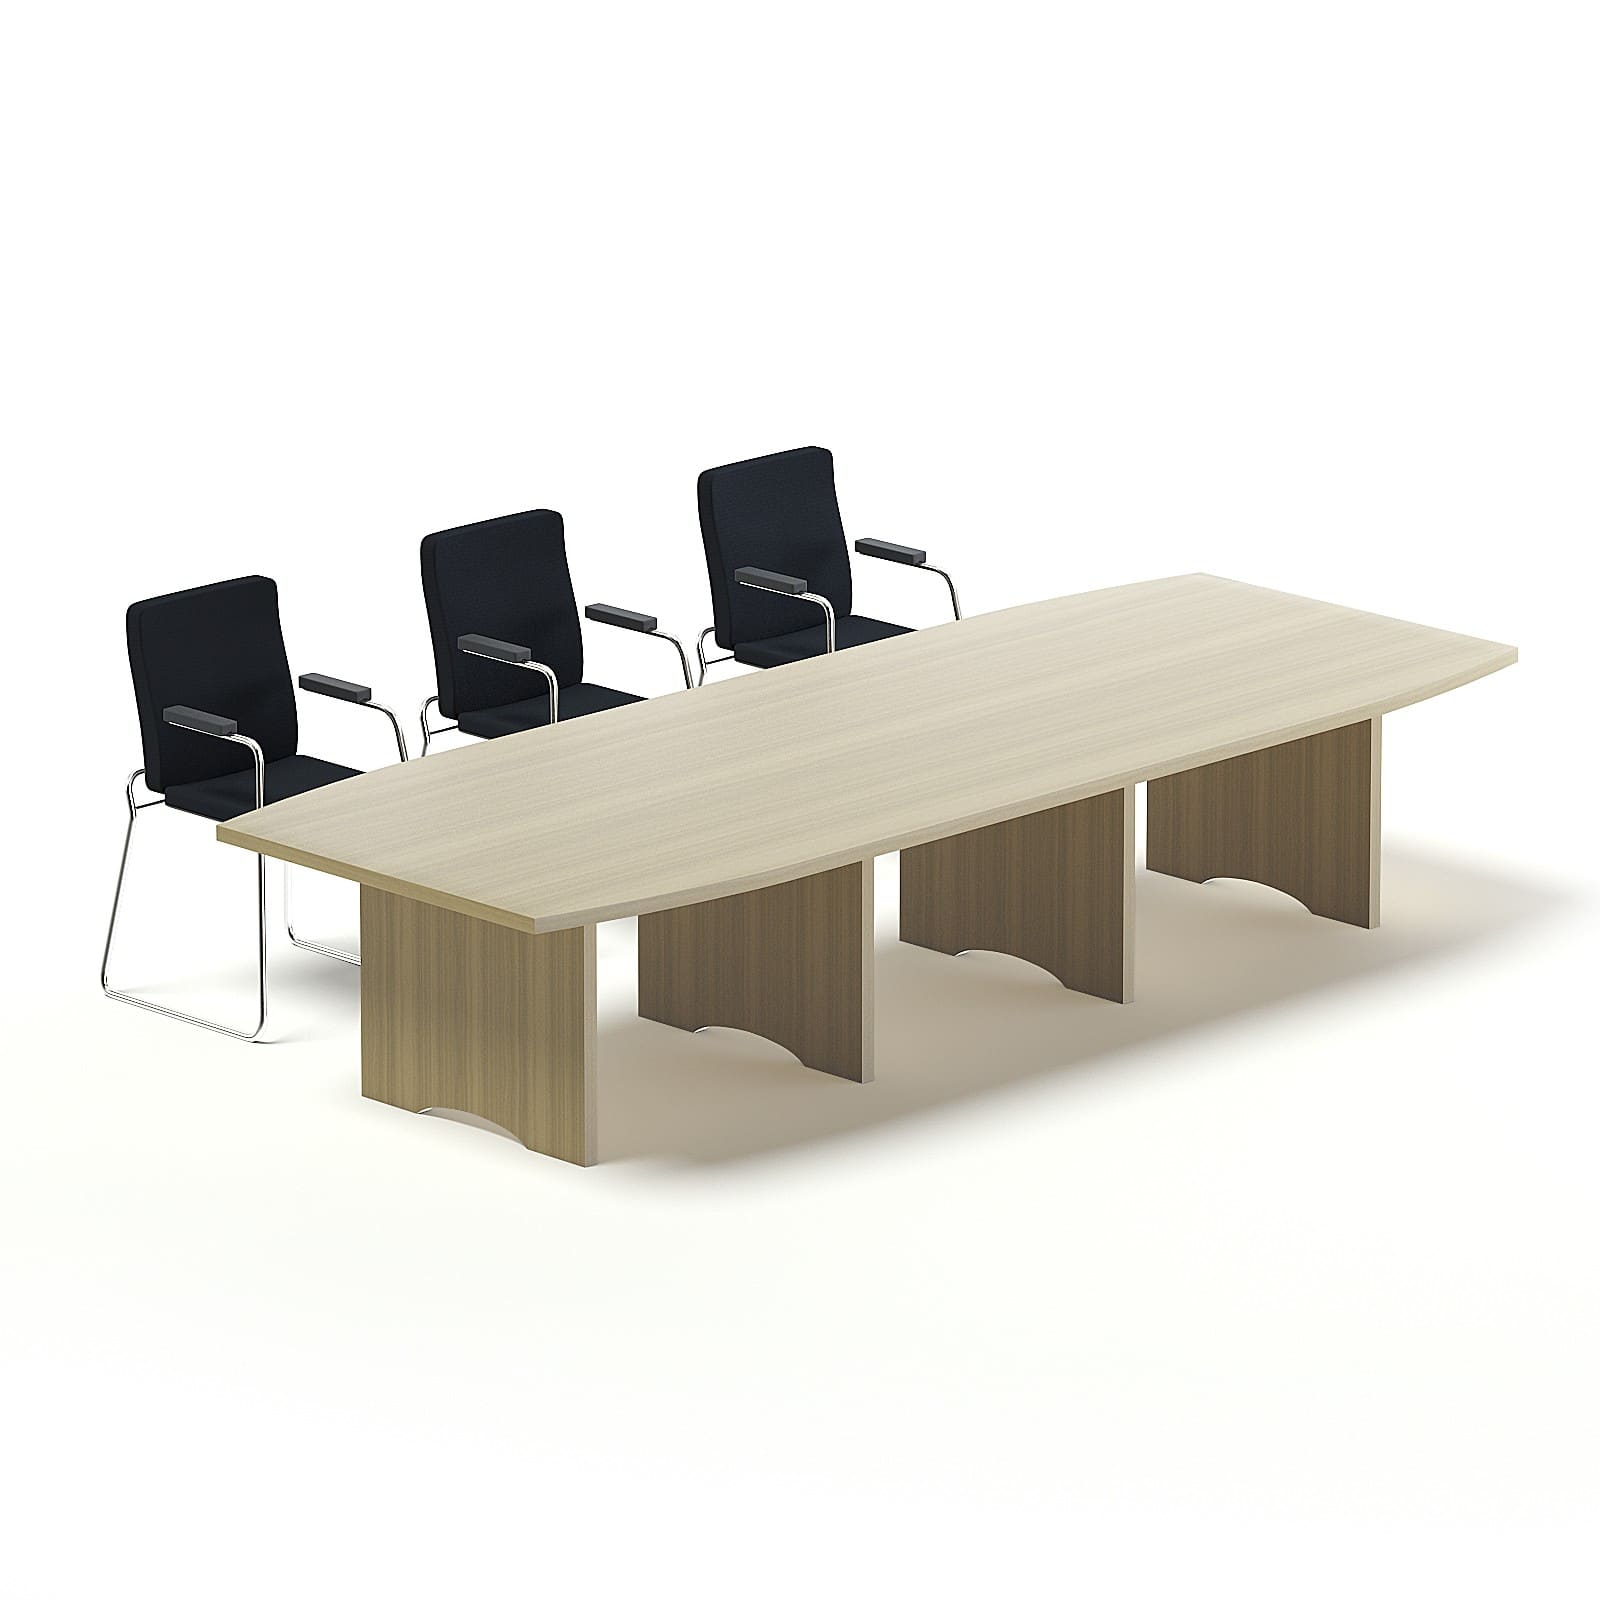 Reception Furniture 3d Models Volume 102 Cgaxis 3d Models Store